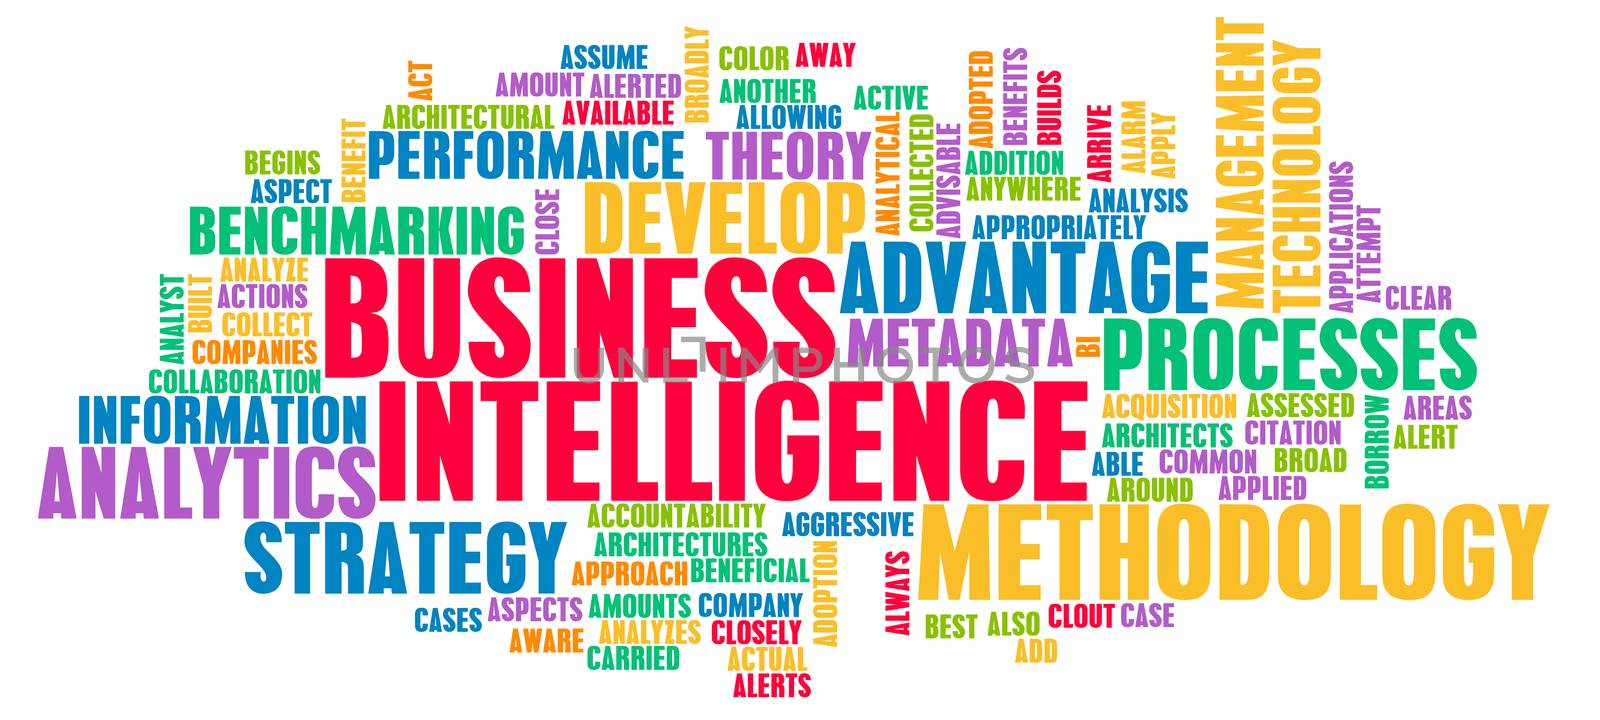 Business Intelligence by kentoh